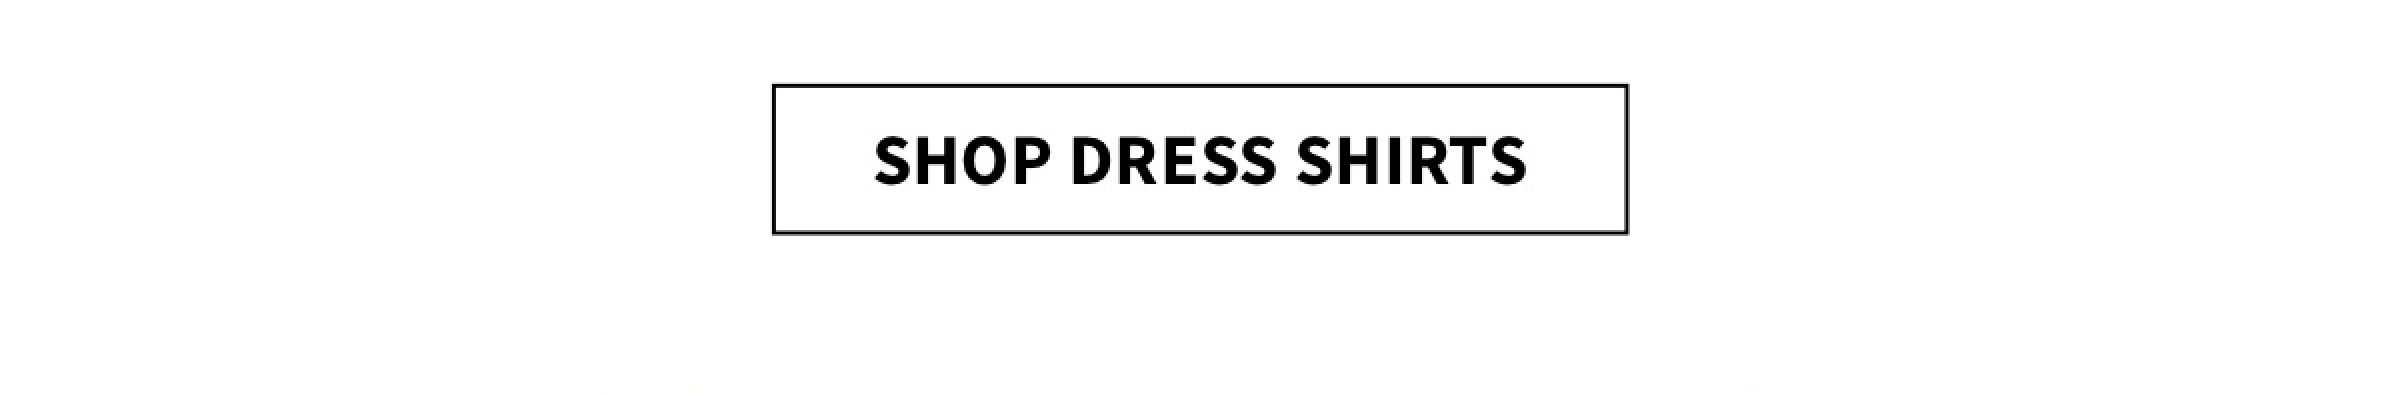 Shop Dress Shirts 